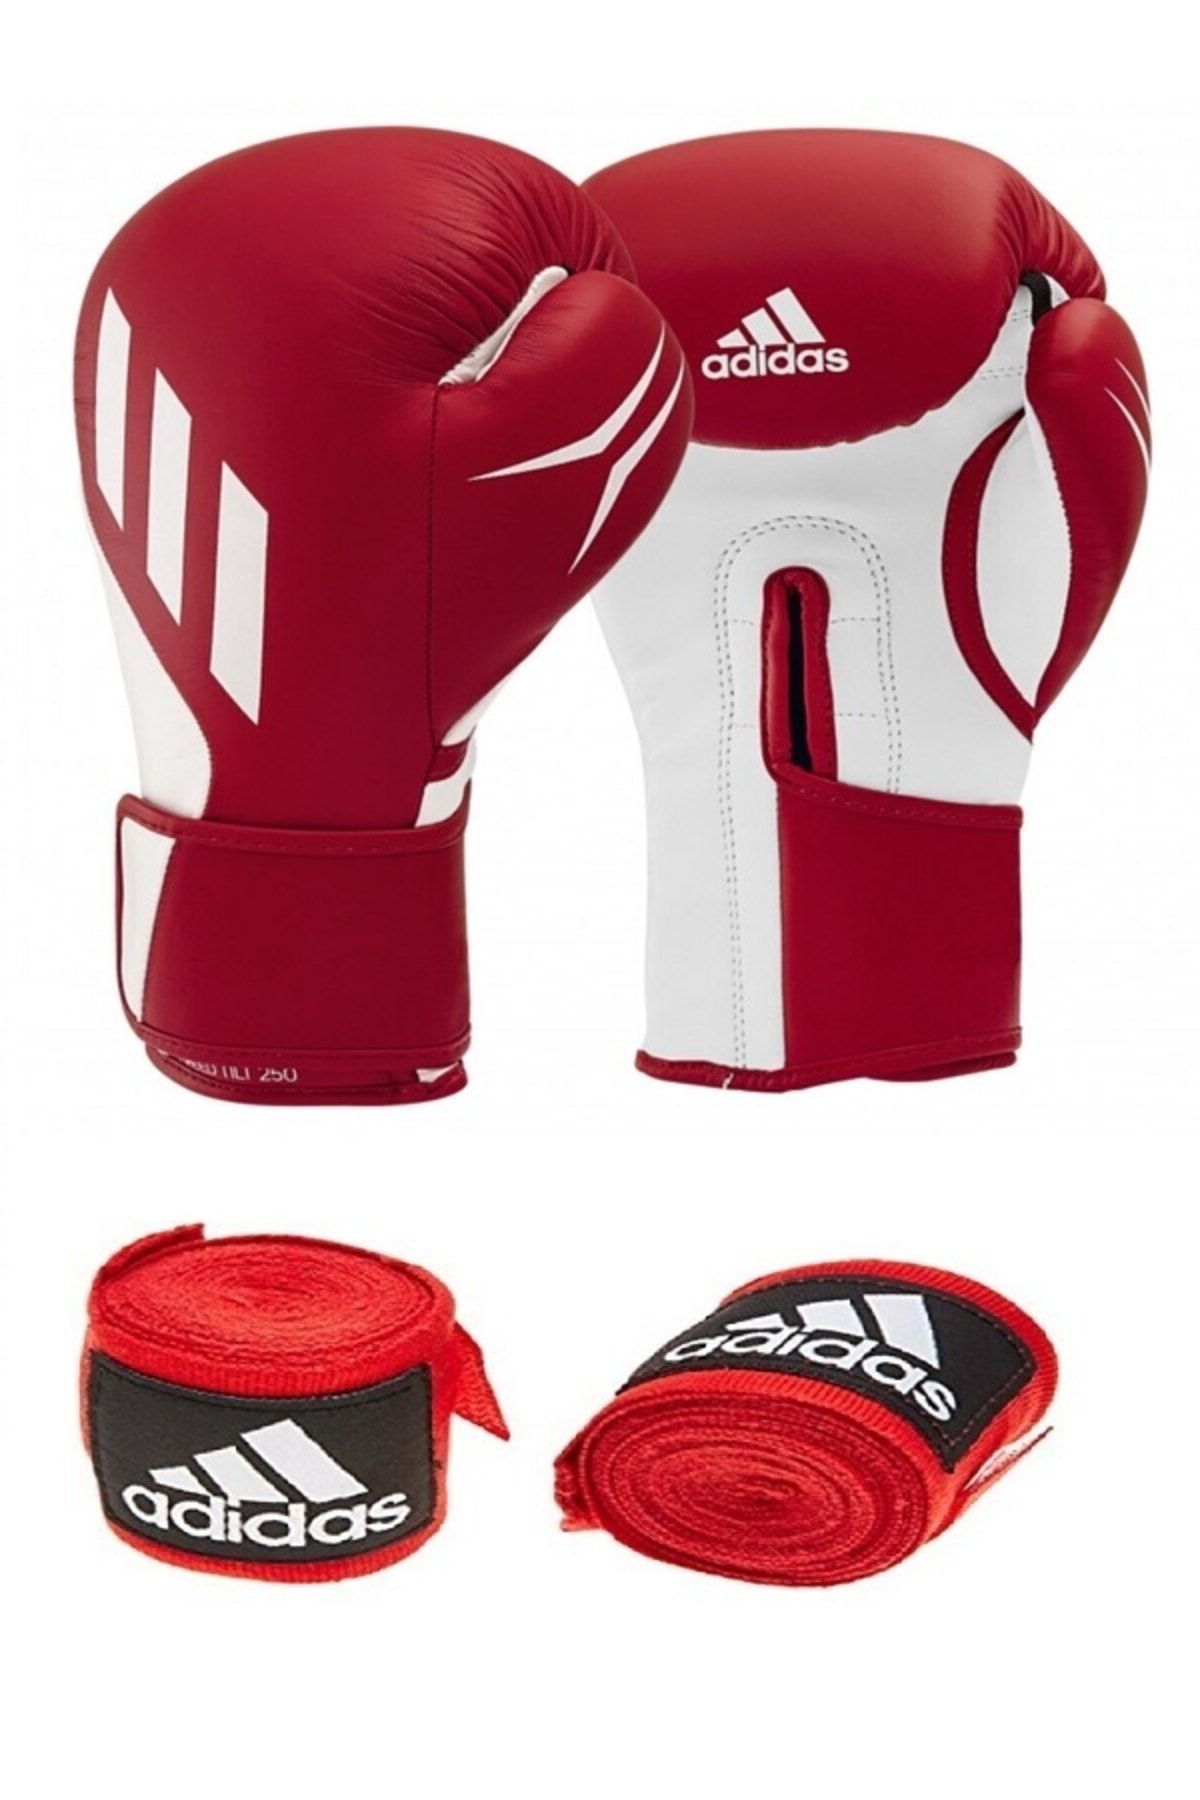 adidas Speed Tilt250 Boks Eldiveni Spd250tg Boxing Gloves Ve Bandaj